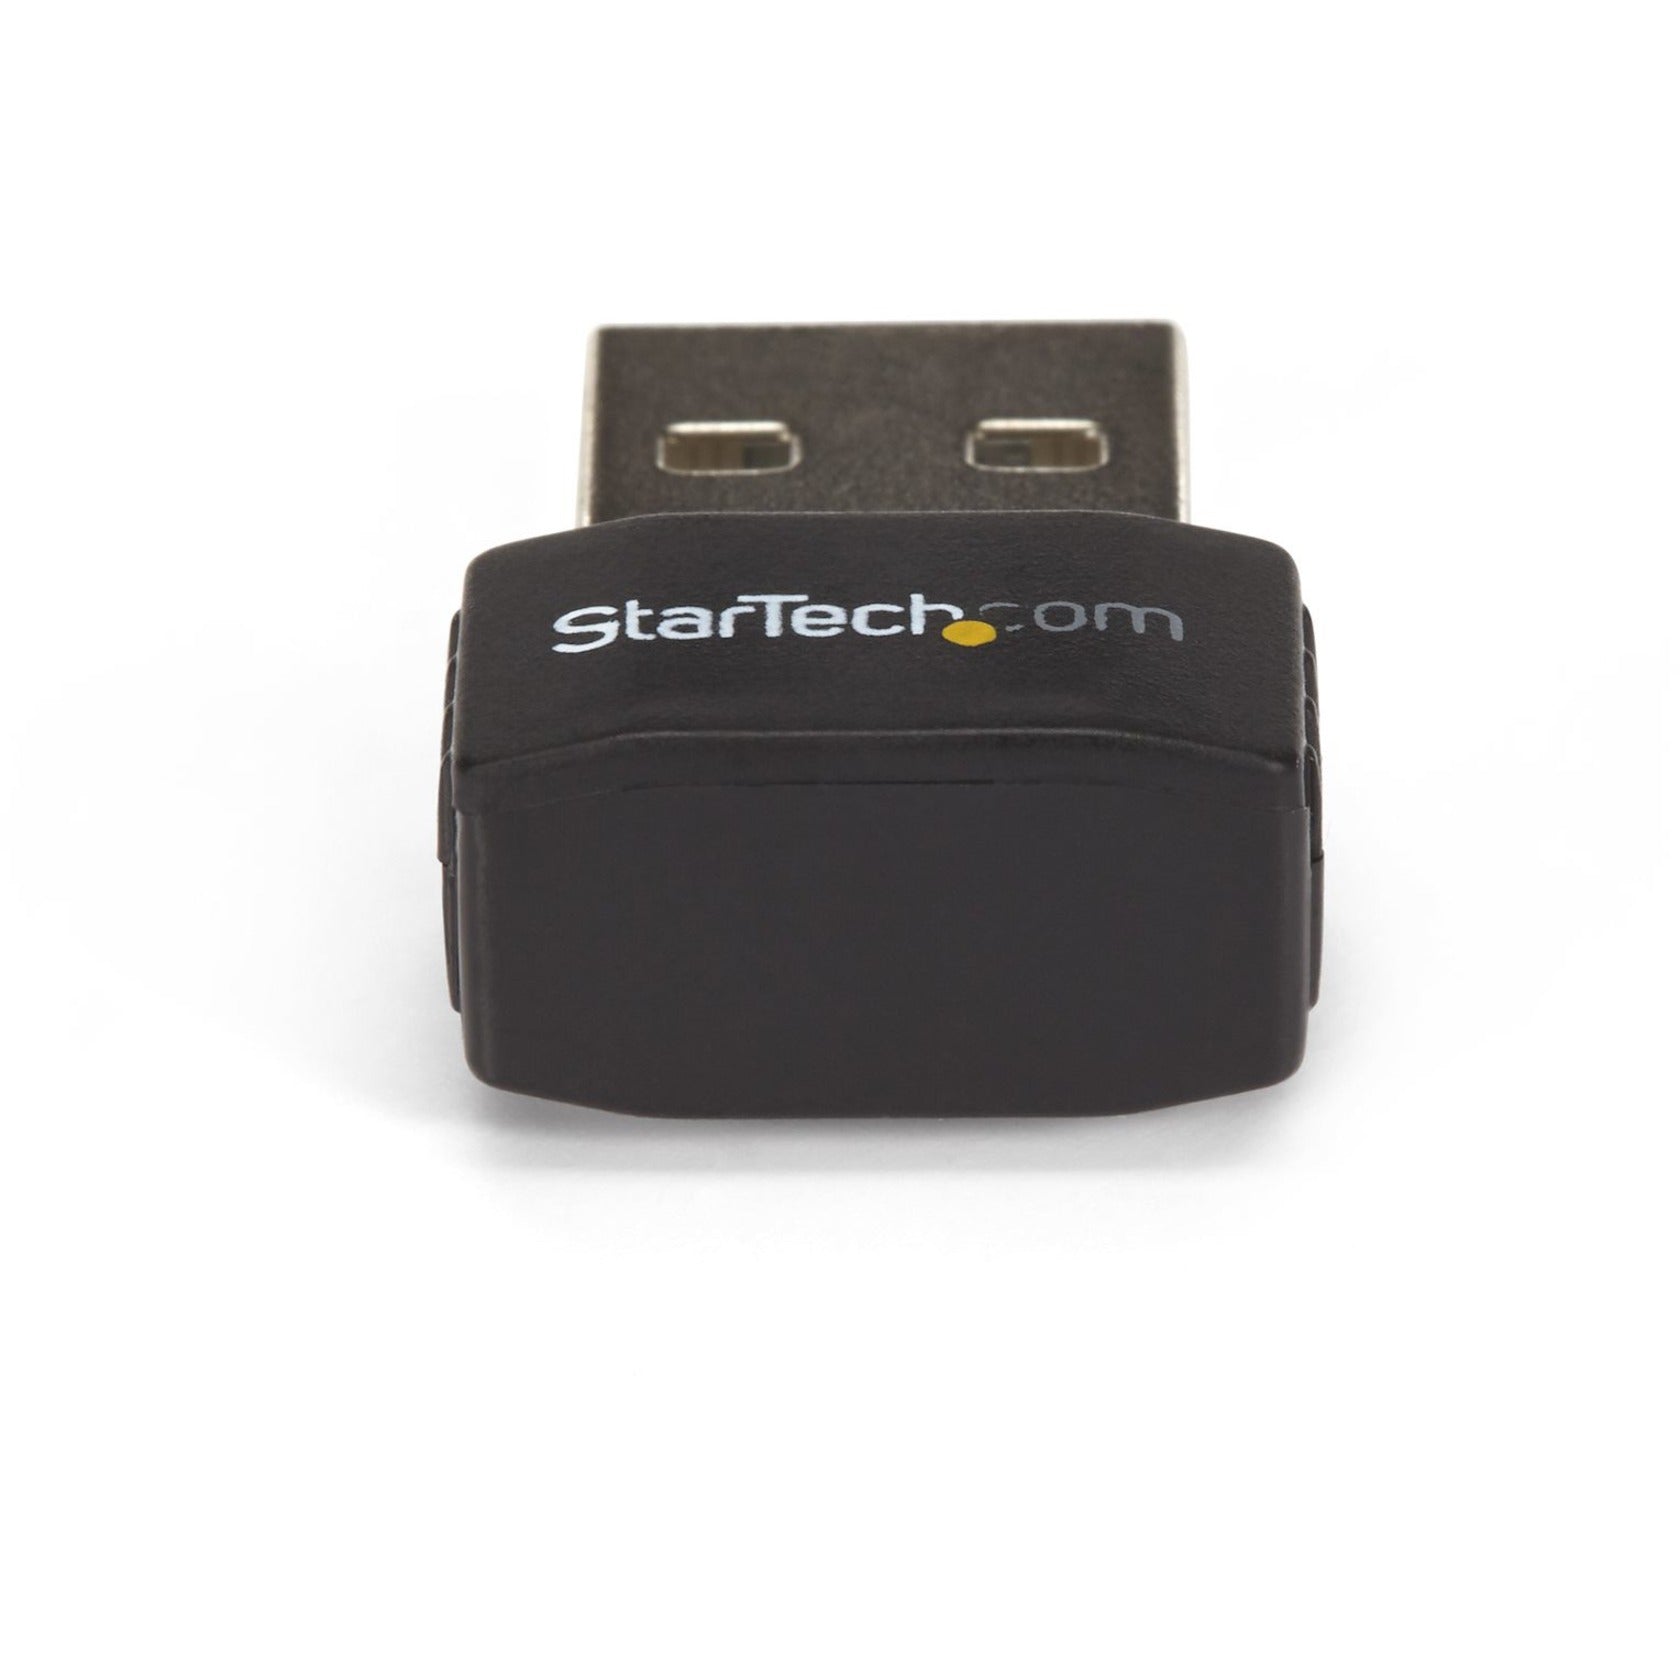 StarTech.com USB433ACD1X1 USB Wi-Fi Adapter - AC600 - Dual-Band Nano Wireless Adapter, 600 Mbit/s